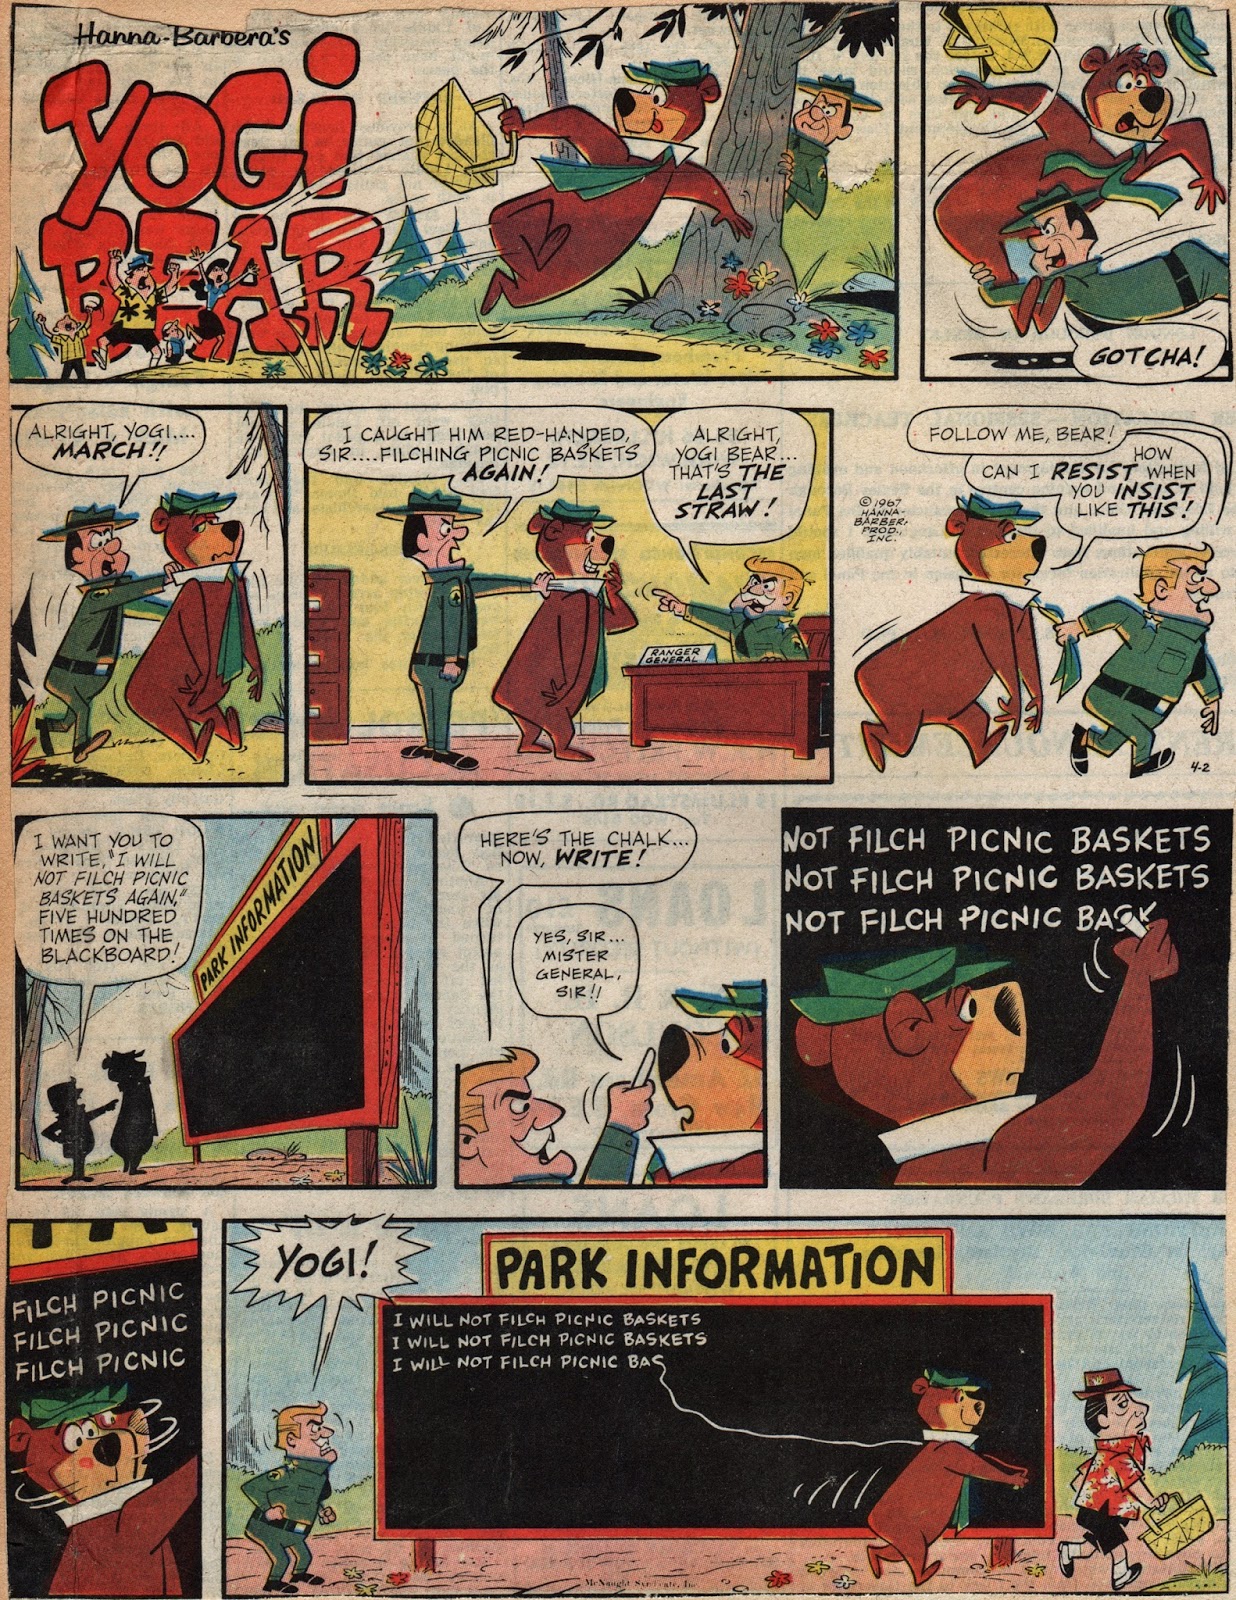 Yowp: Yogi Bear Weekend Comics, April 1967